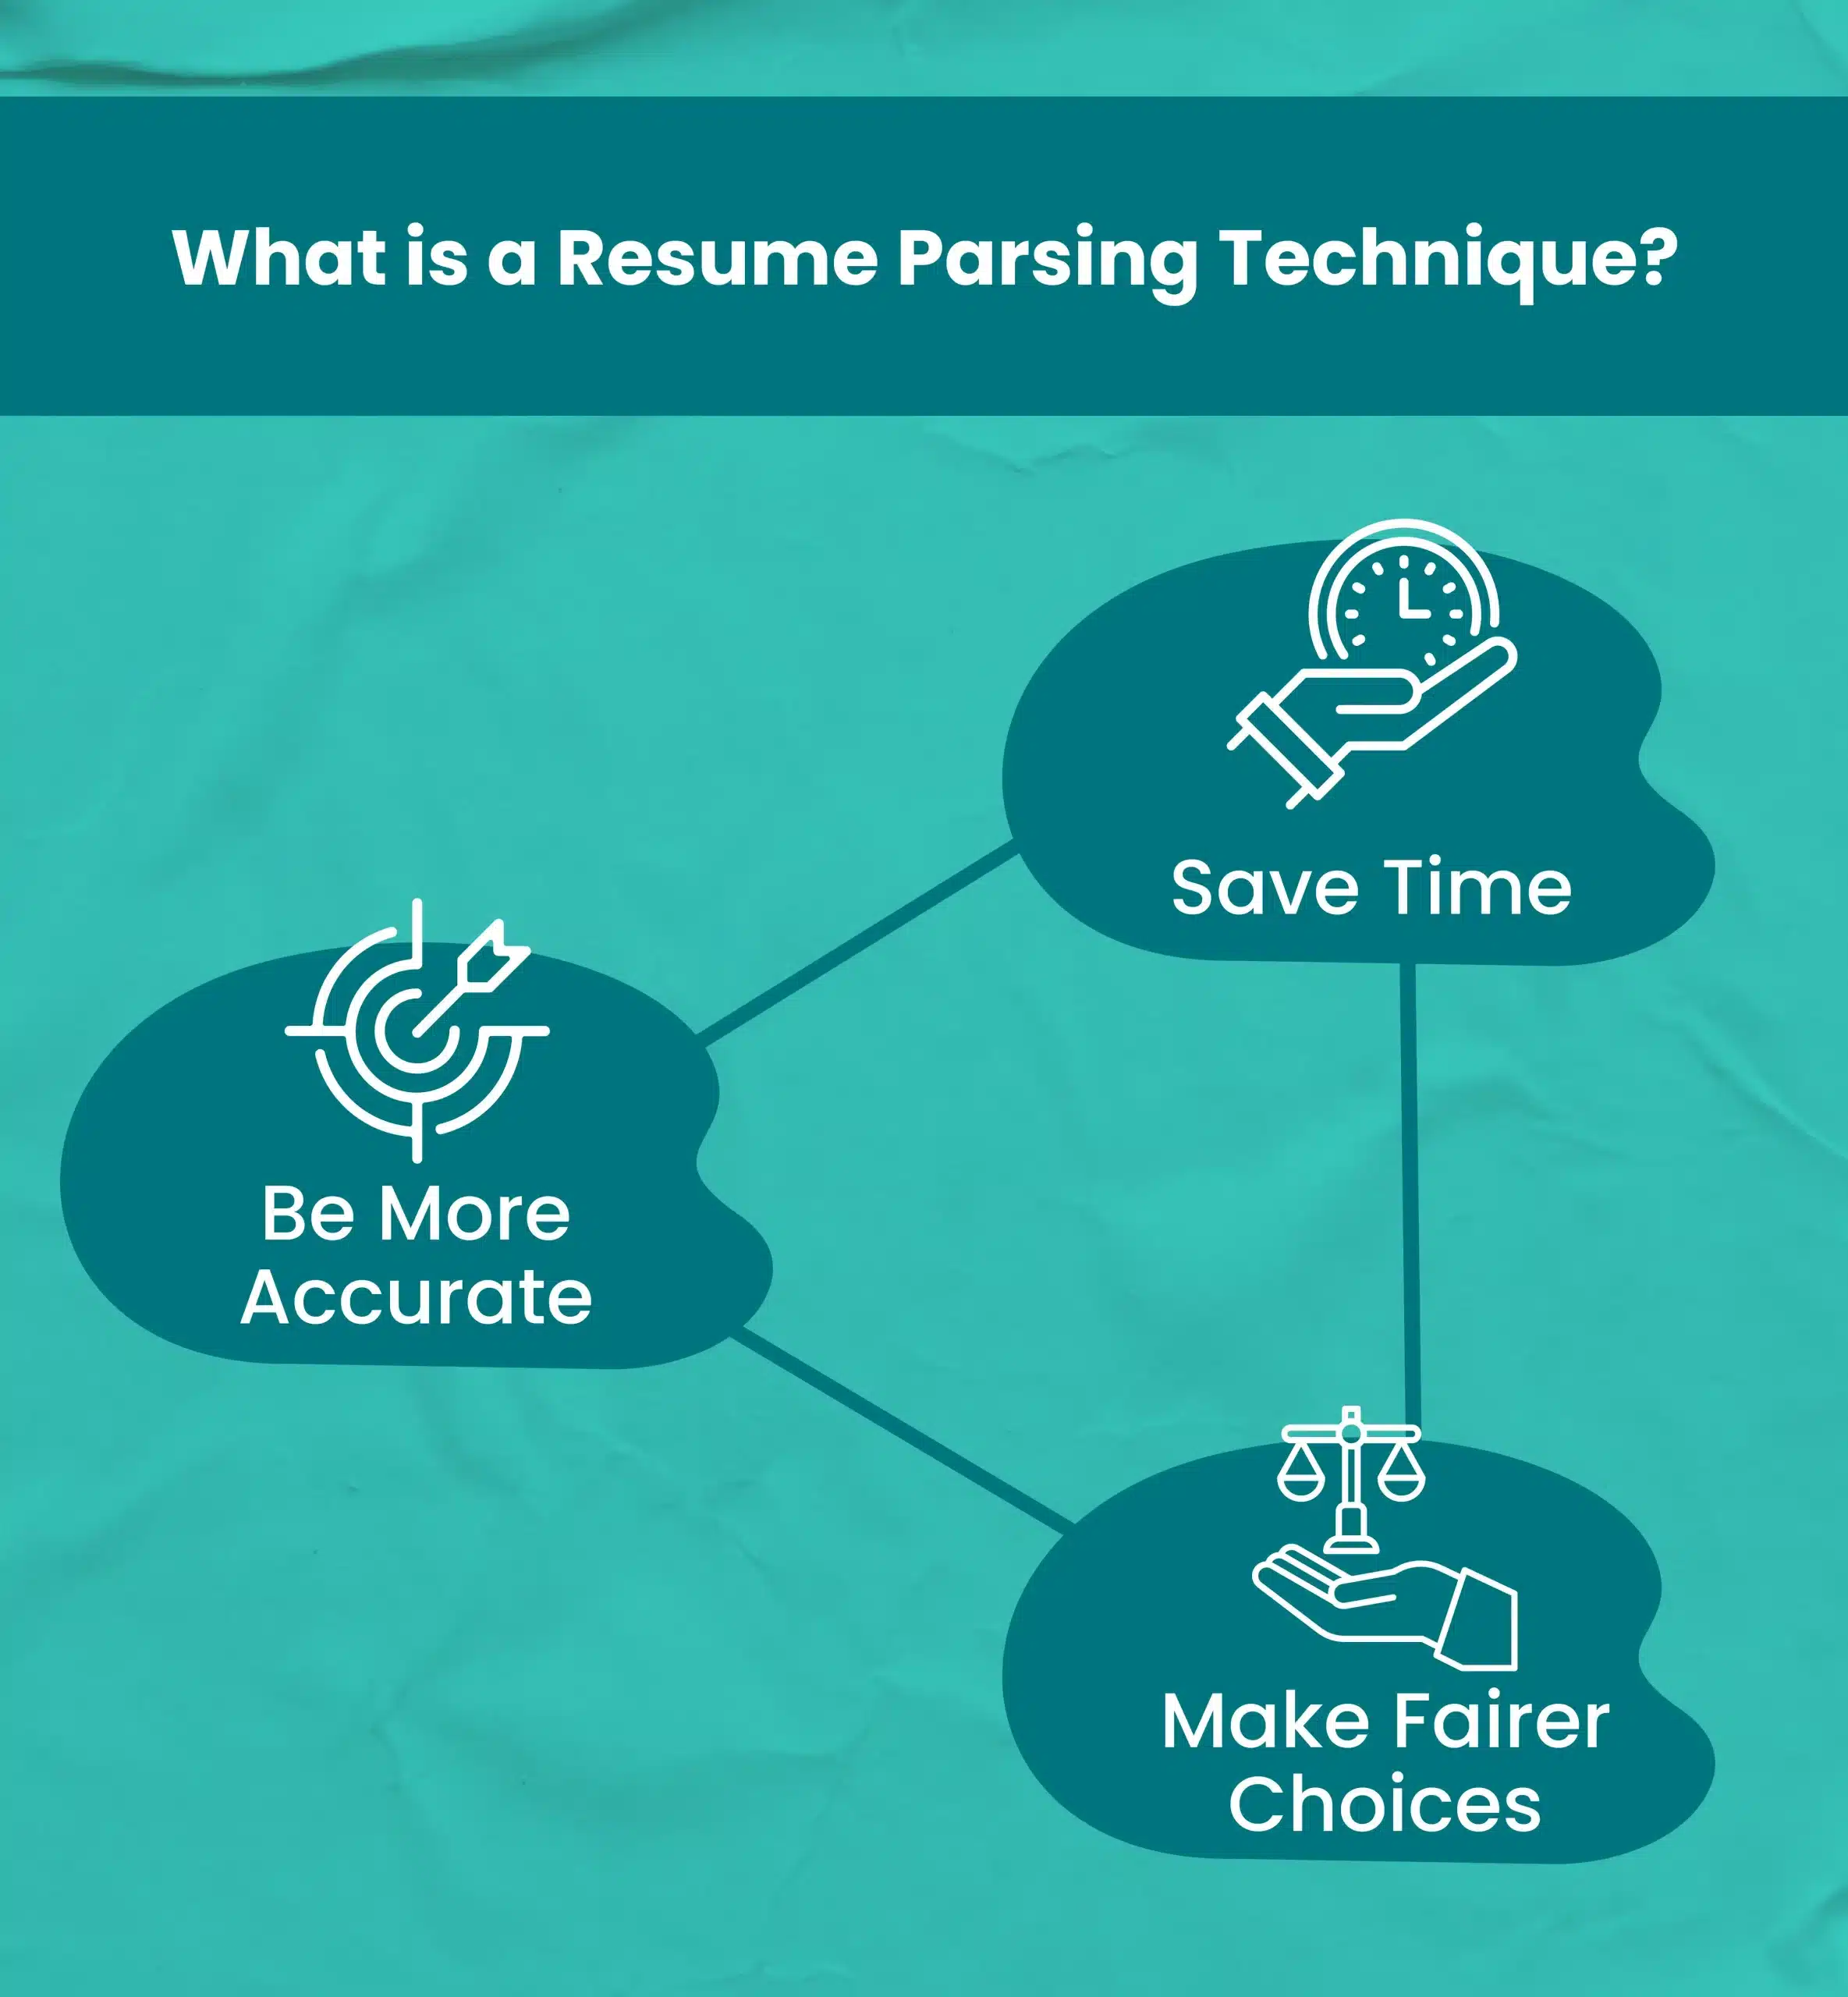 What is a Resume Parsing Technique?